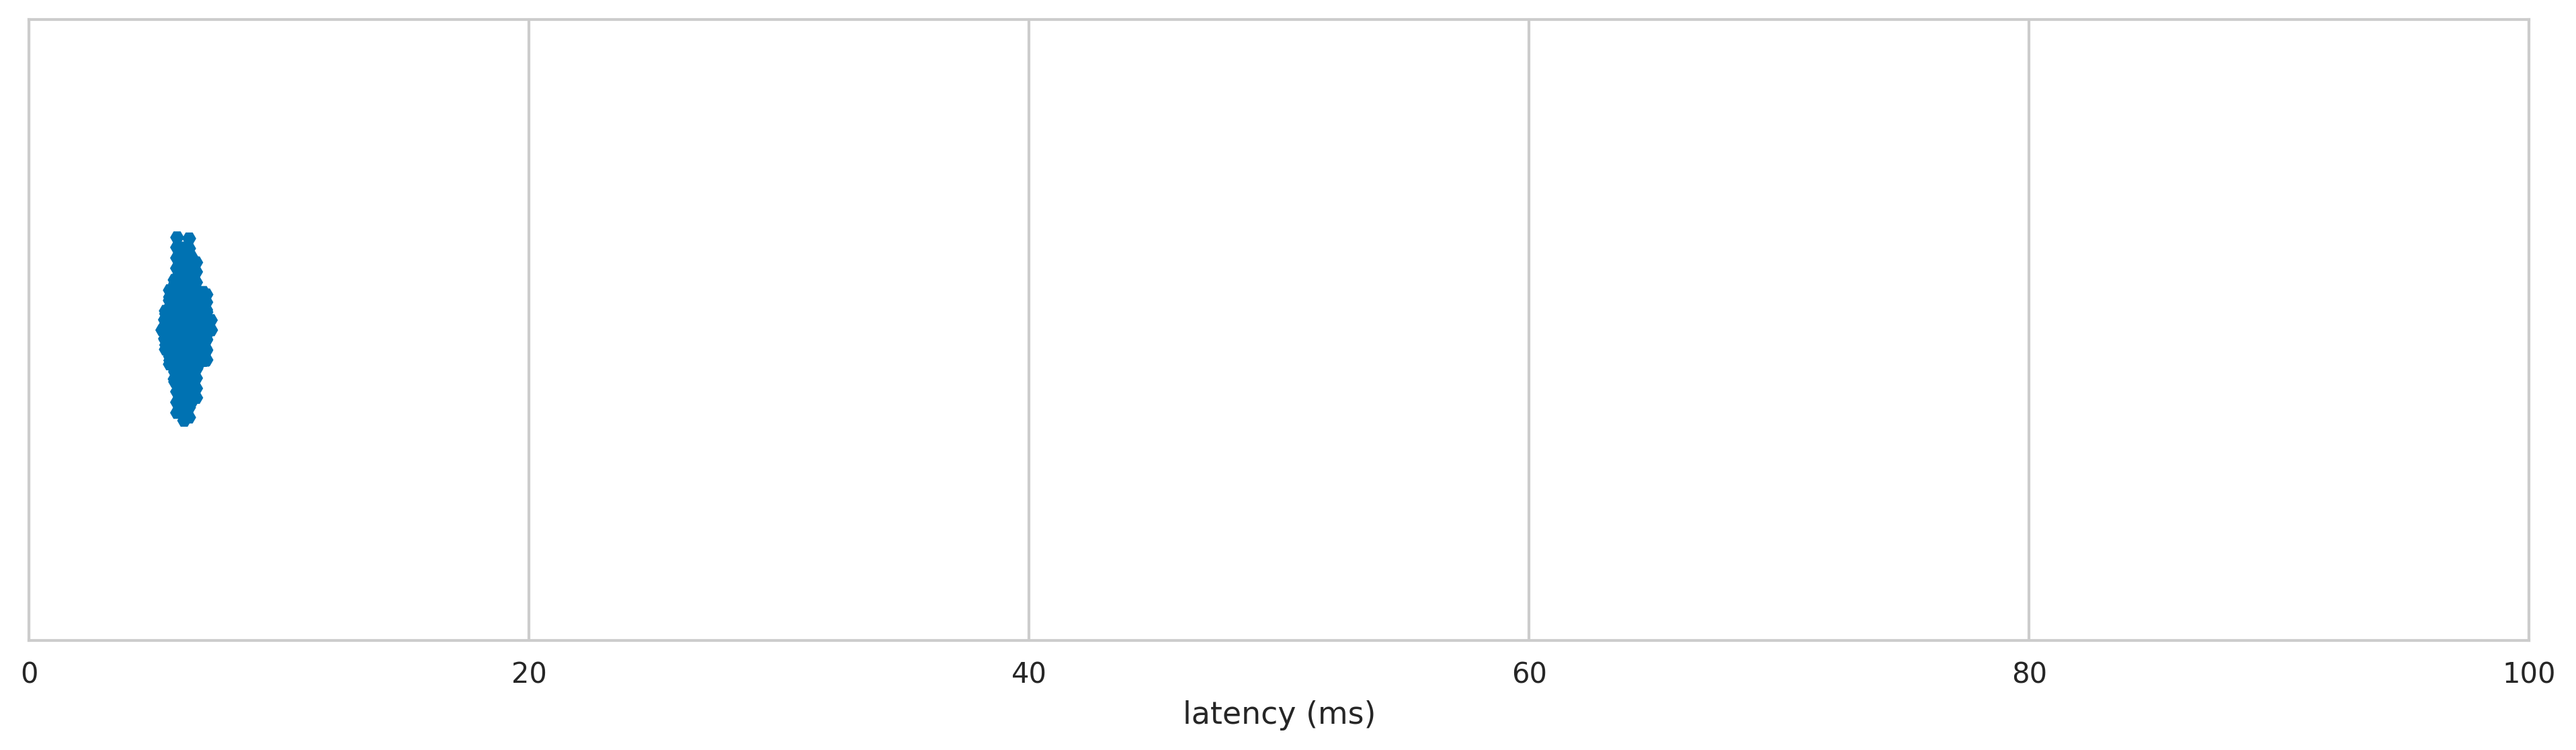 Microsoft Intellimouse latency distribution 